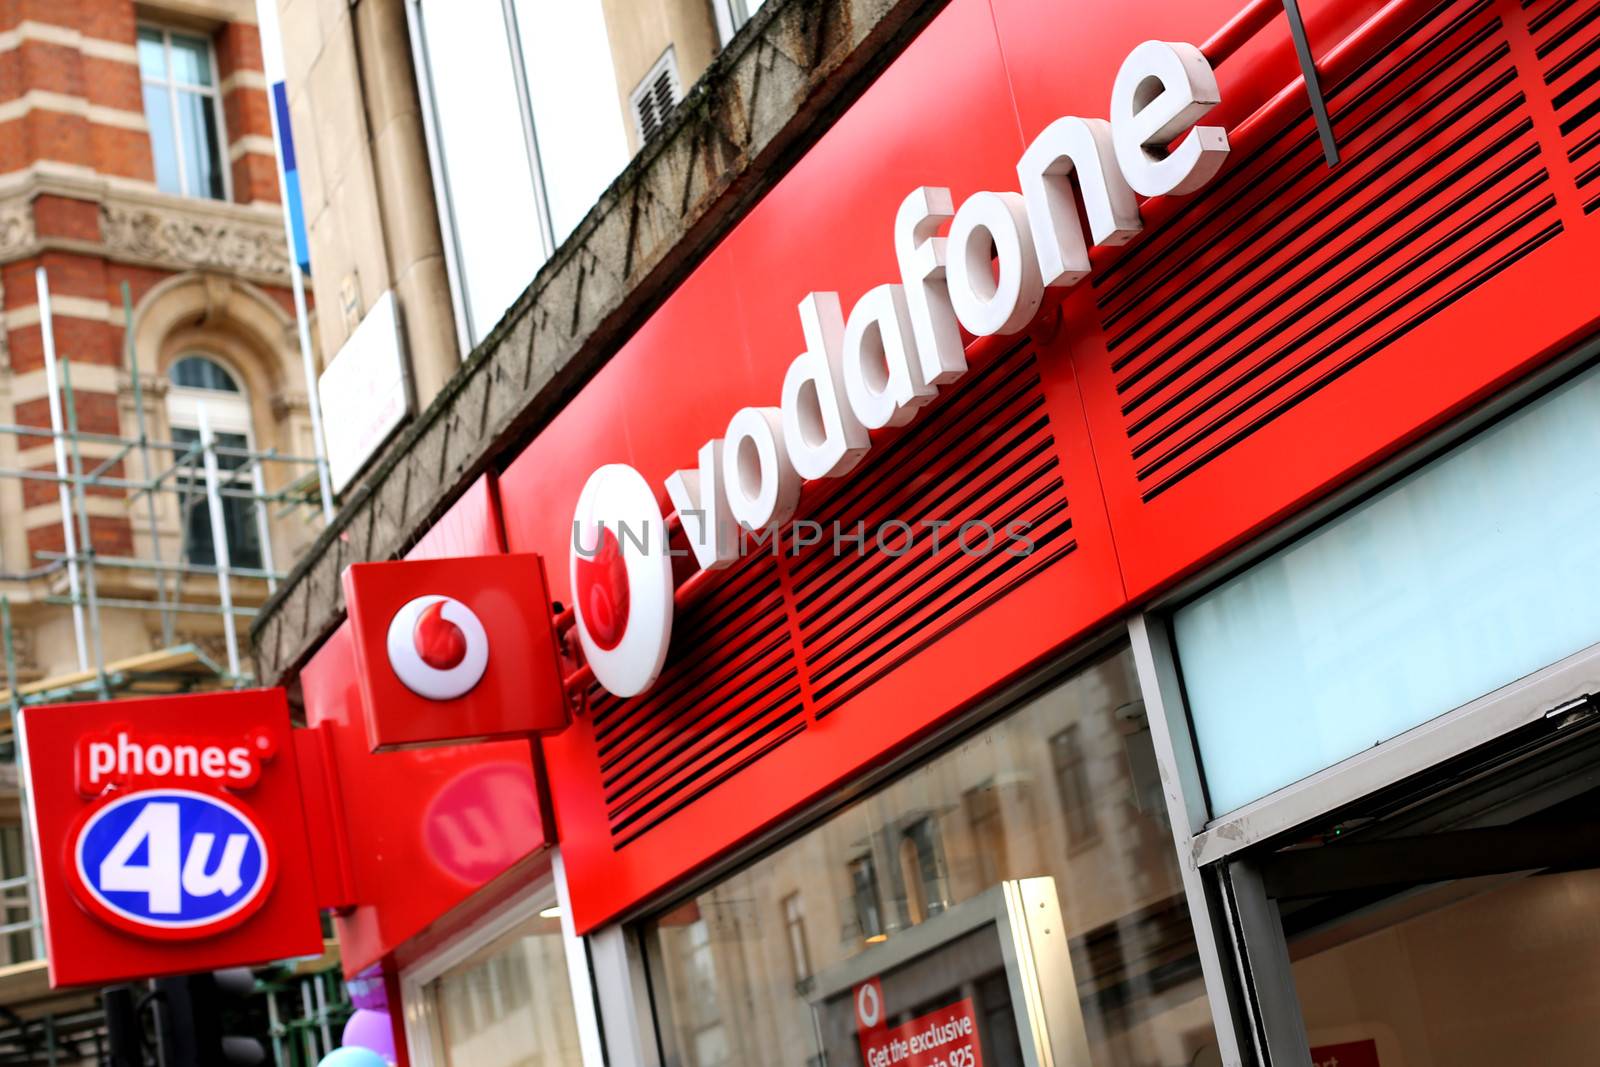 Vodafone Shop sign Oxford Street London